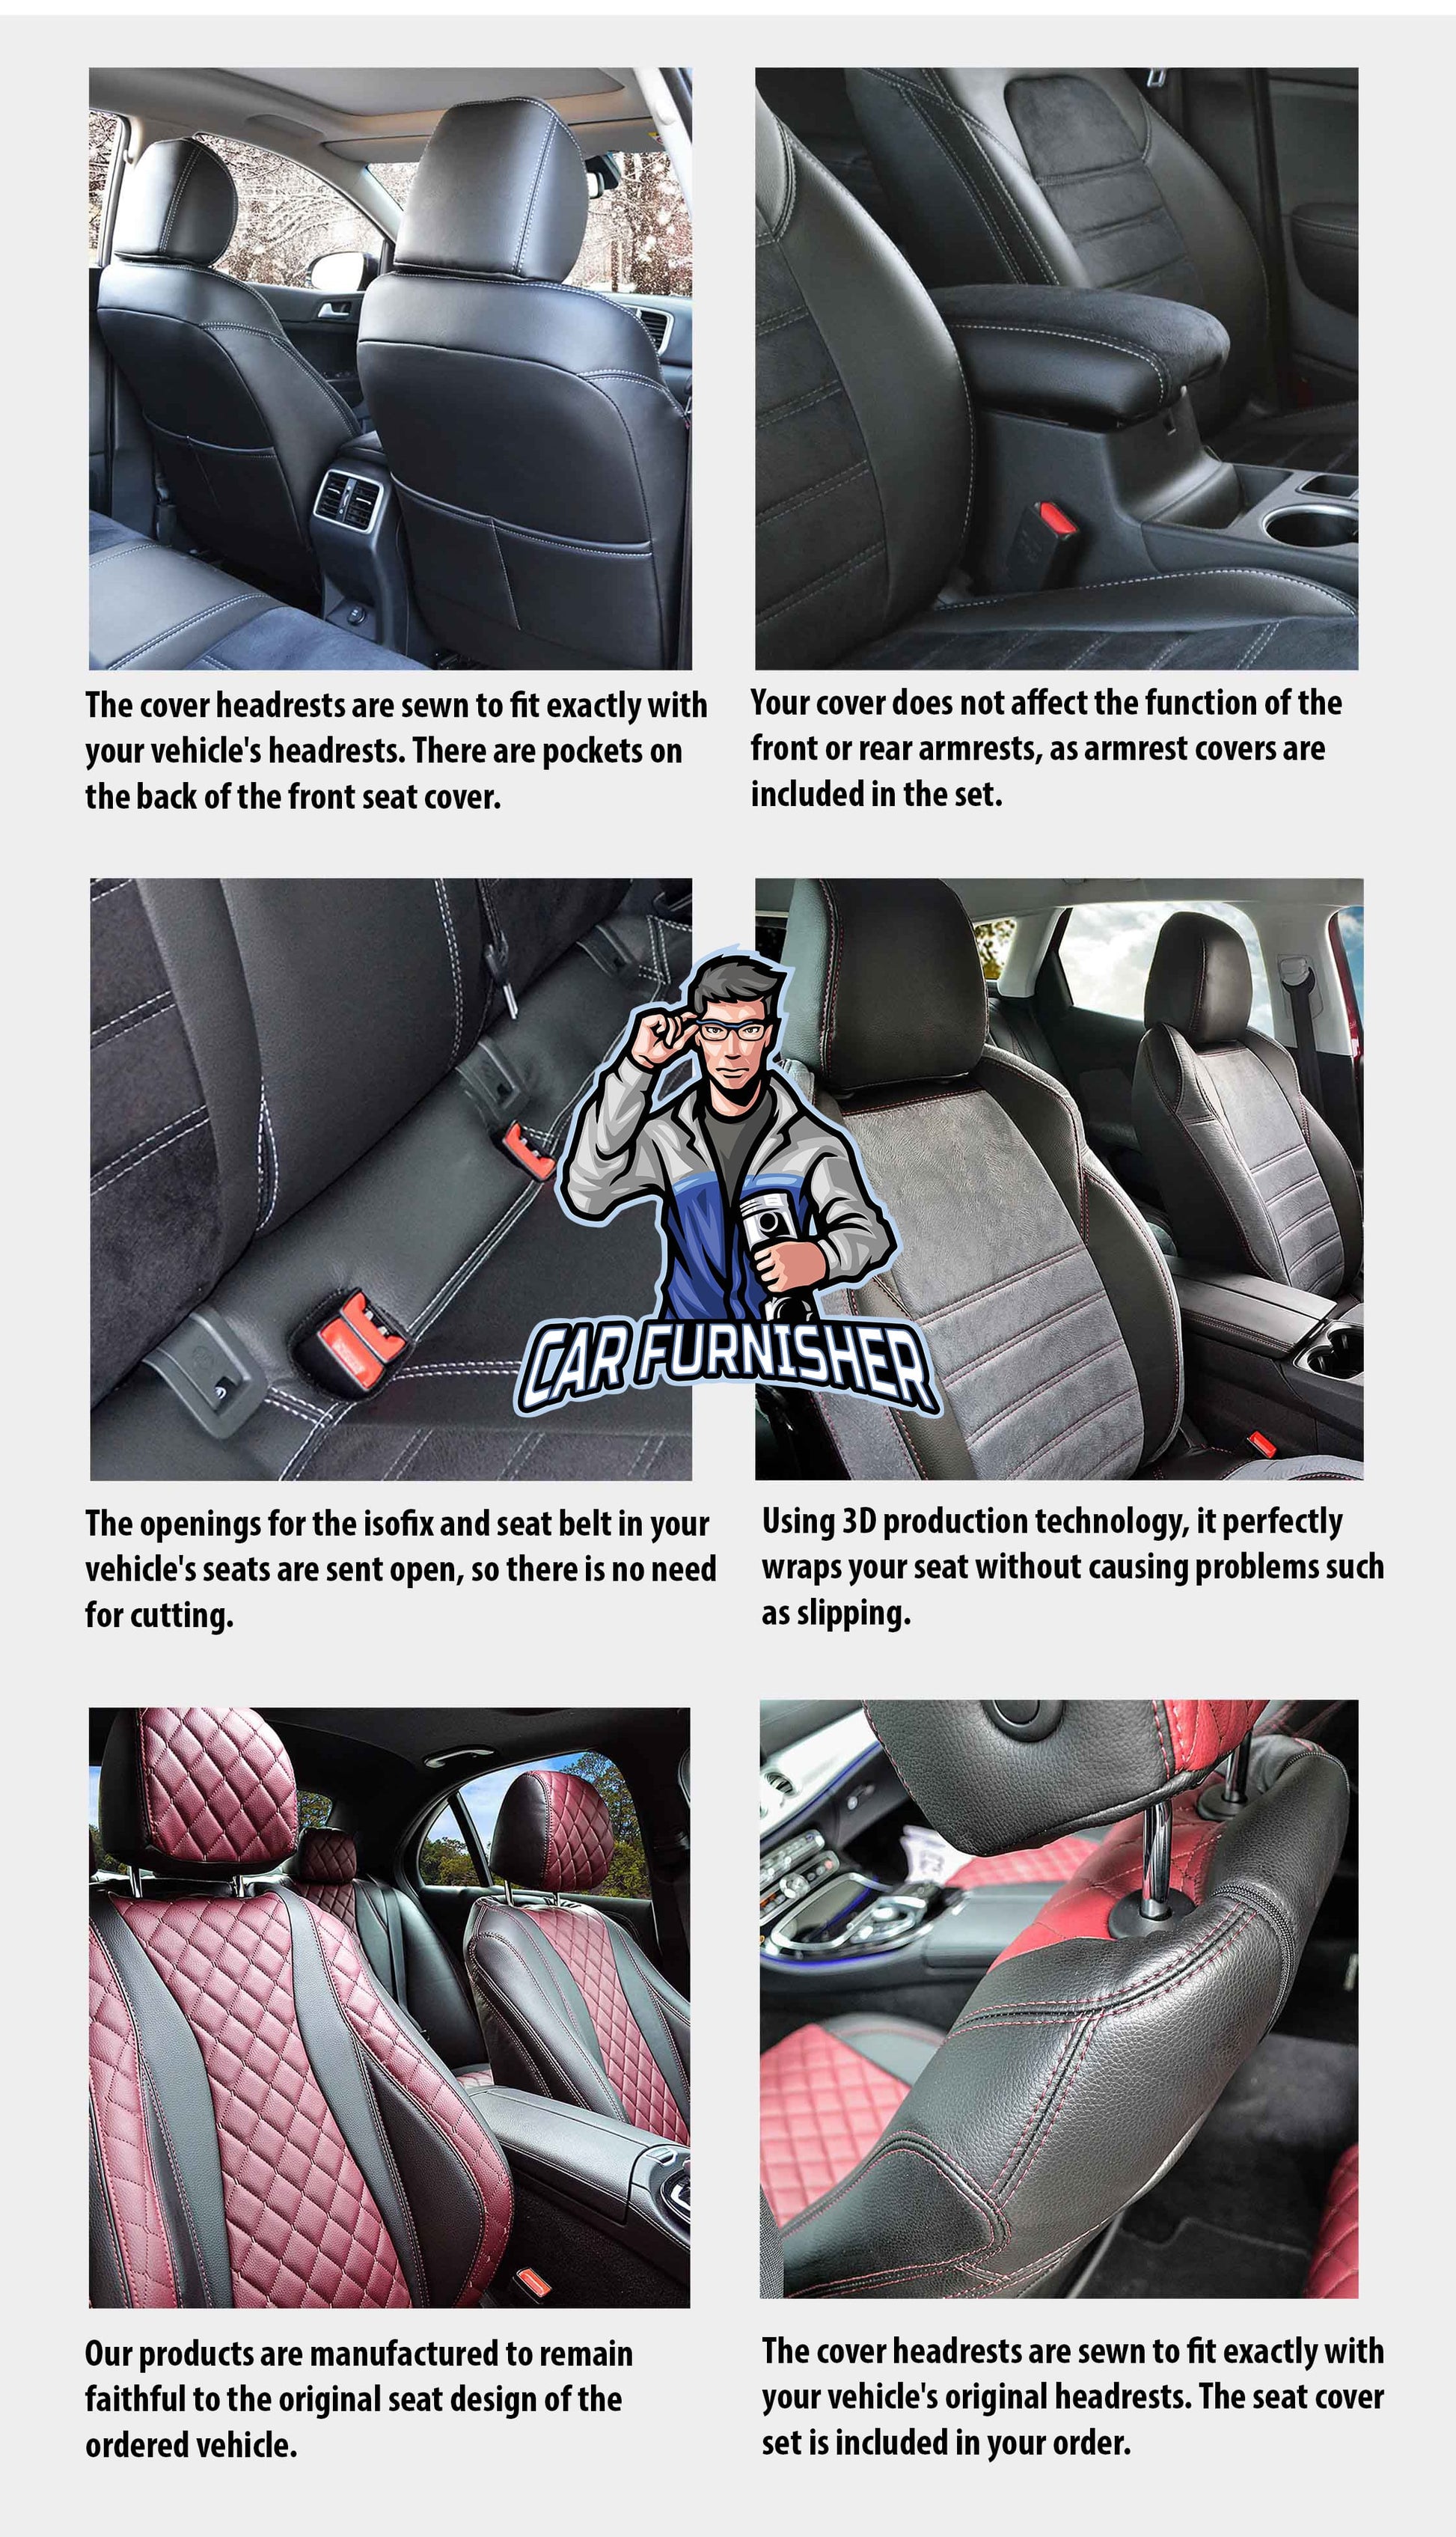 Volkswagen Crafter Seat Cover Original Jacquard Design Dark Gray Jacquard Fabric